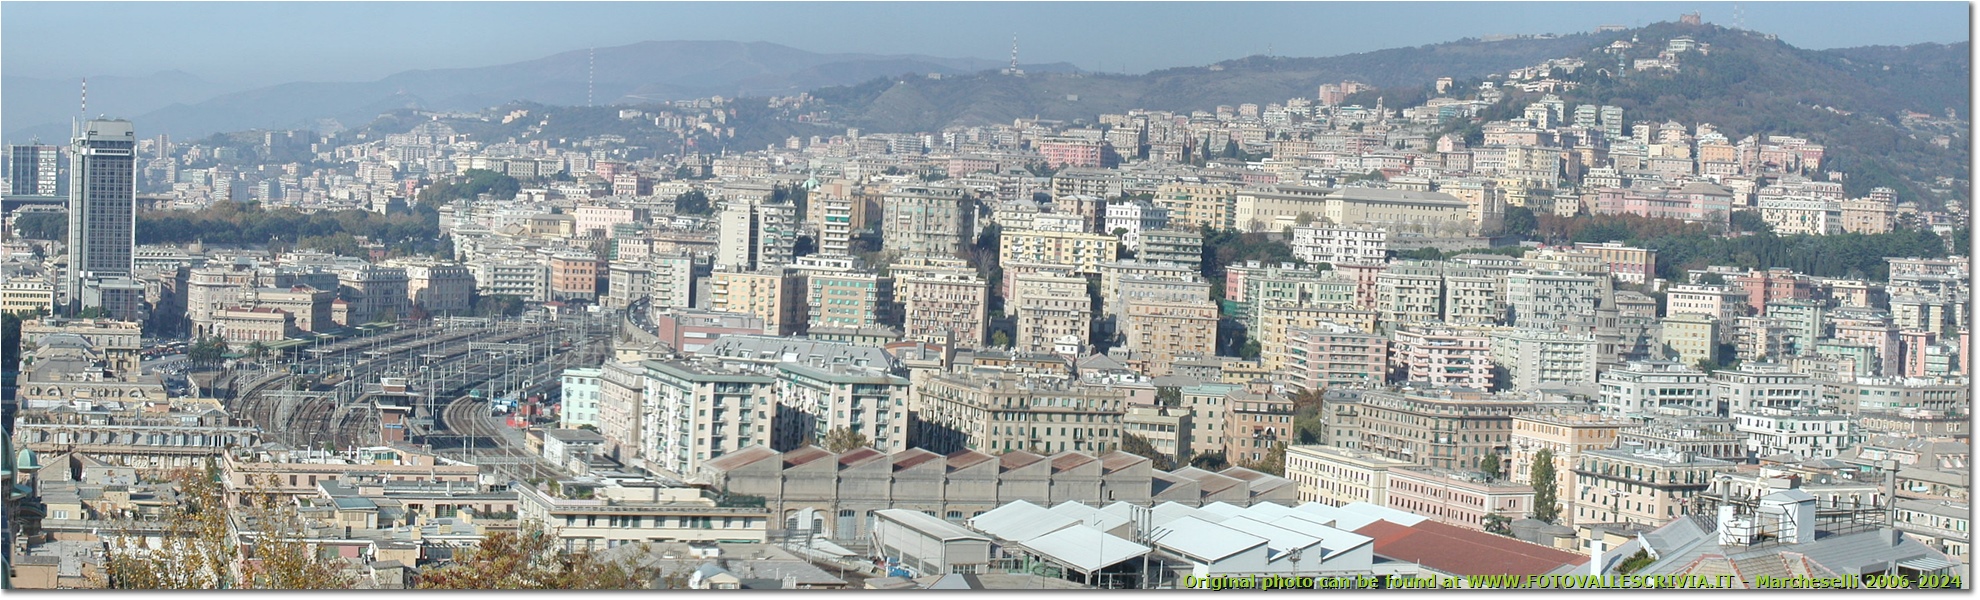 Panorama dalla facoltà di Ingegneria: la stazione di Genova Brignole e Oregina - Genova - 2005 - Paesi - Foto varie - Olympus Camedia 3000